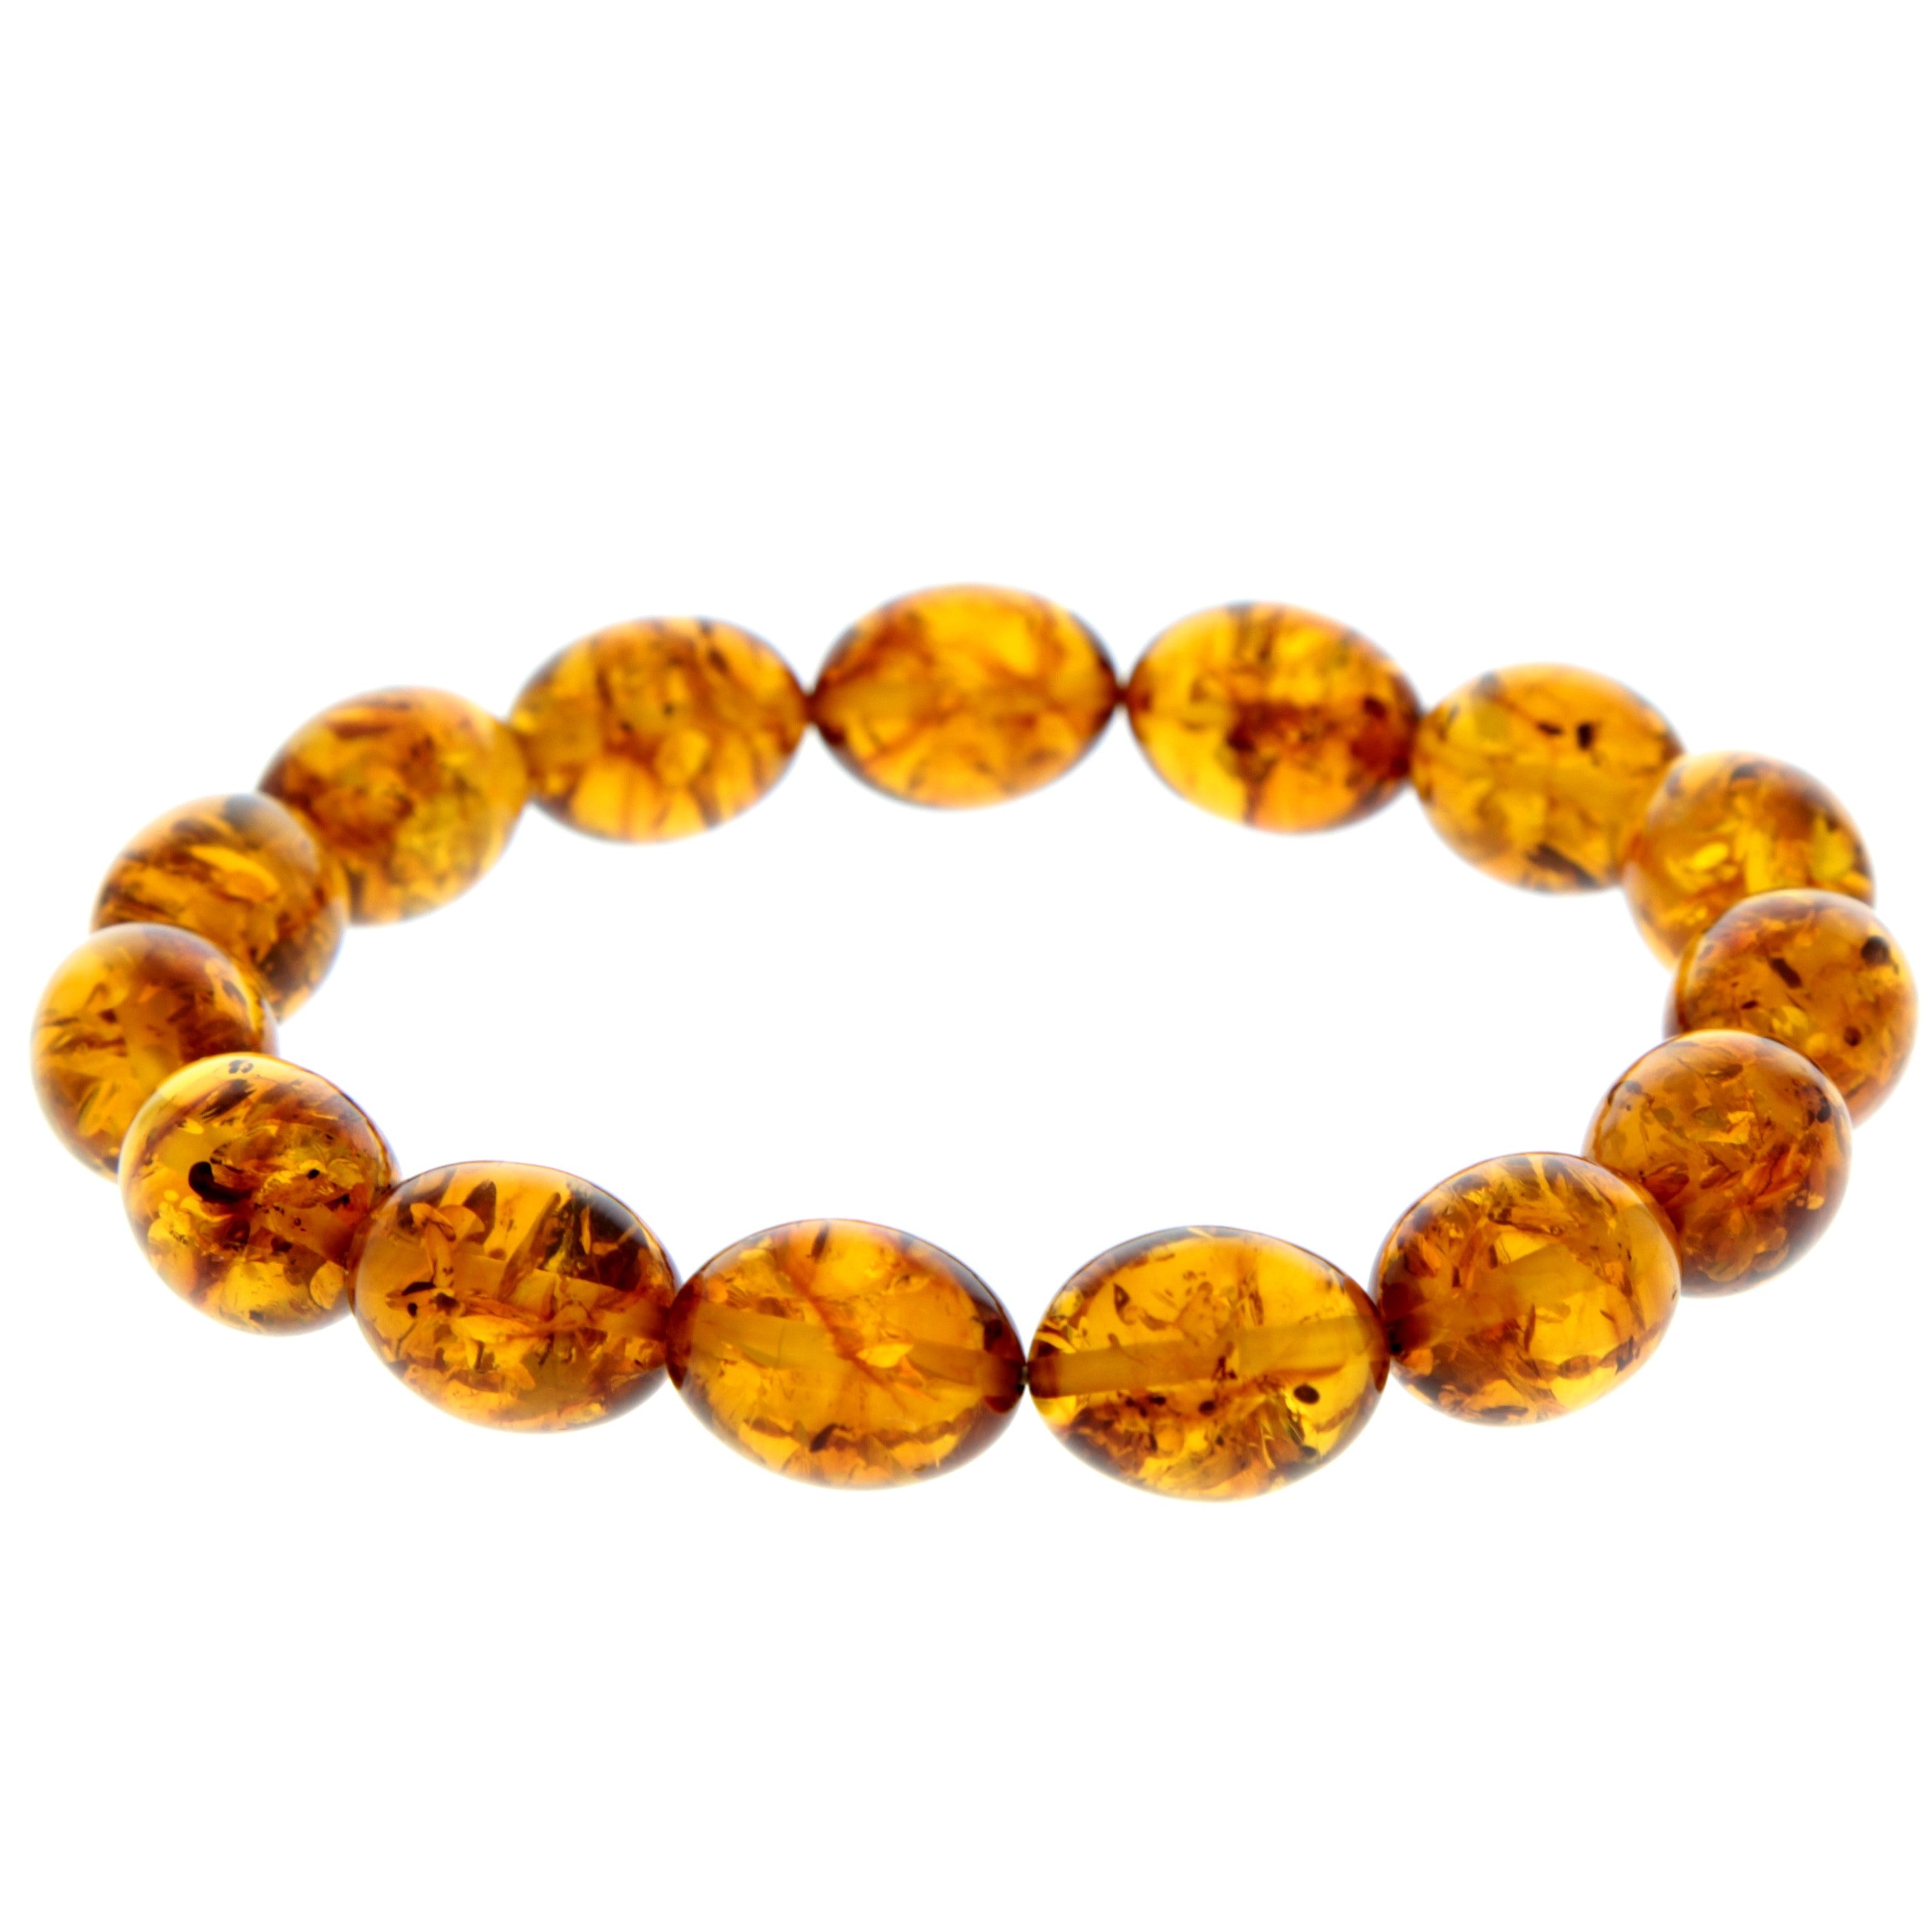 Genuine Baltic Amber Elastic Bracelet for Women - Oval Olive Amber Beads 12x10 mm - BT0175